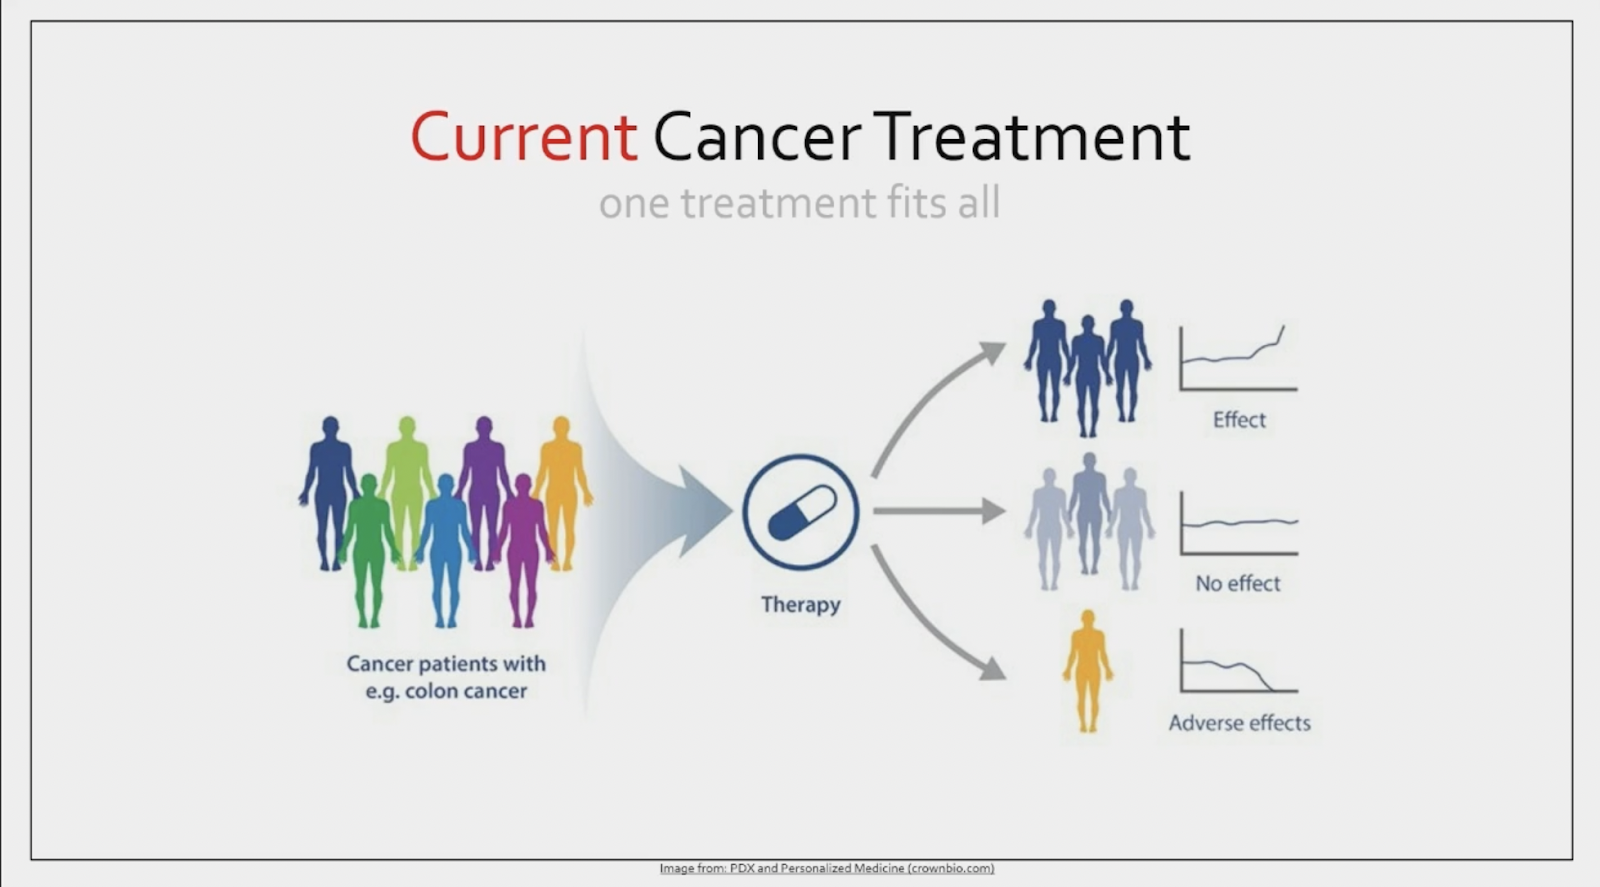 Current cancer treatment